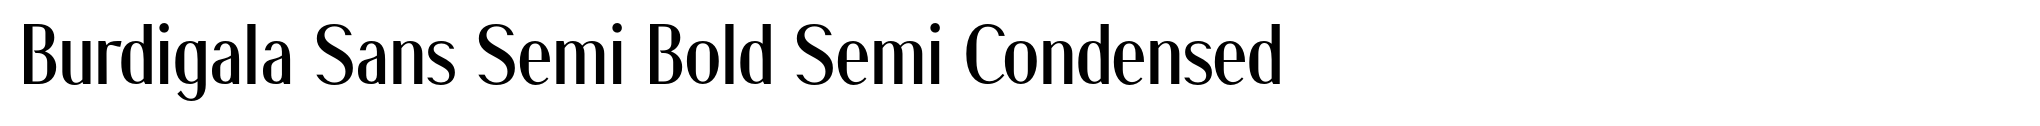 Burdigala Sans Semi Bold Semi Condensed image